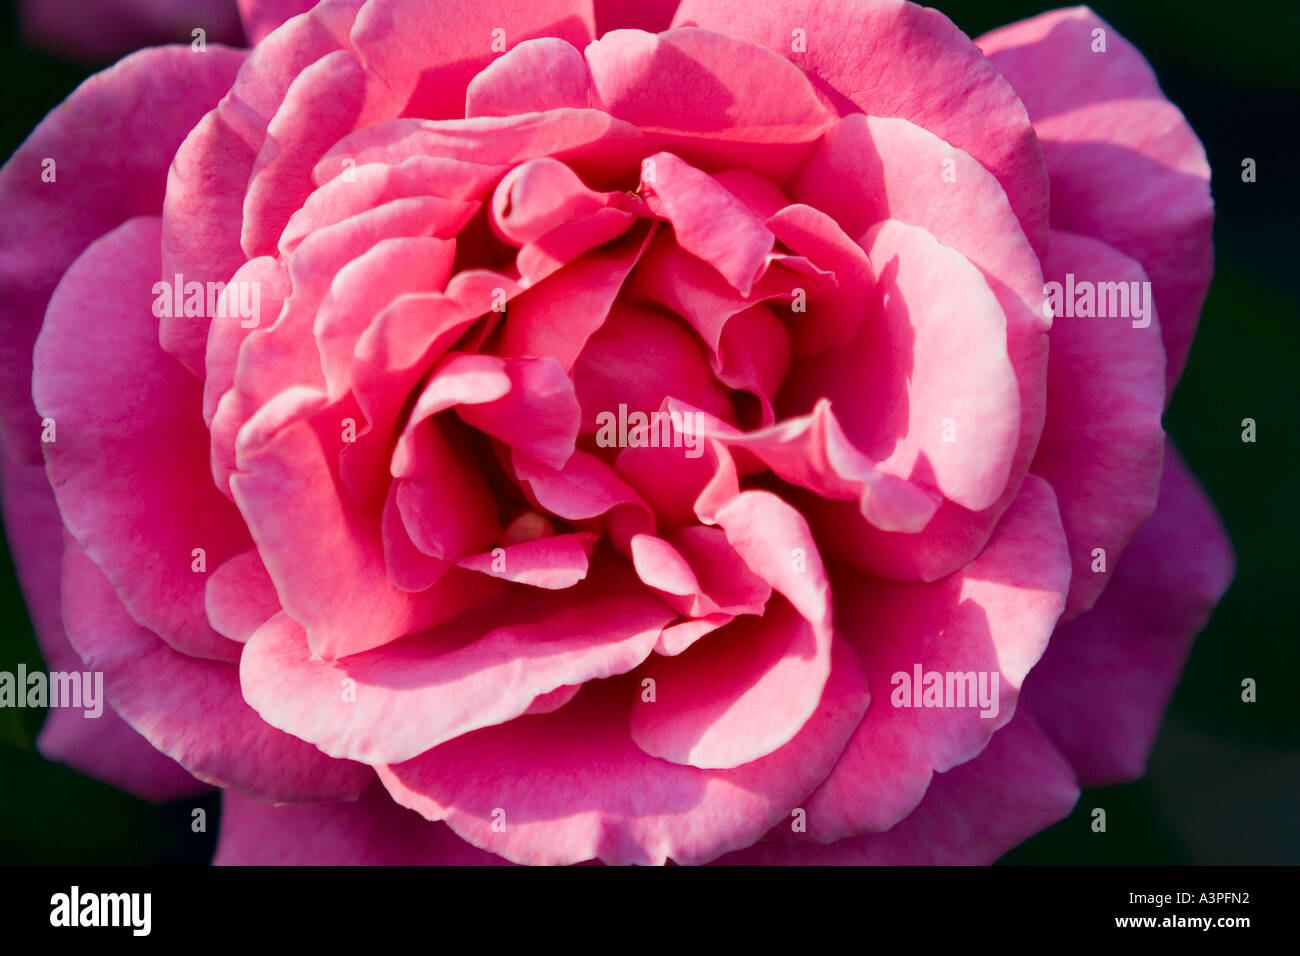 Pink rose (Rosa ), close-up Stock Photo